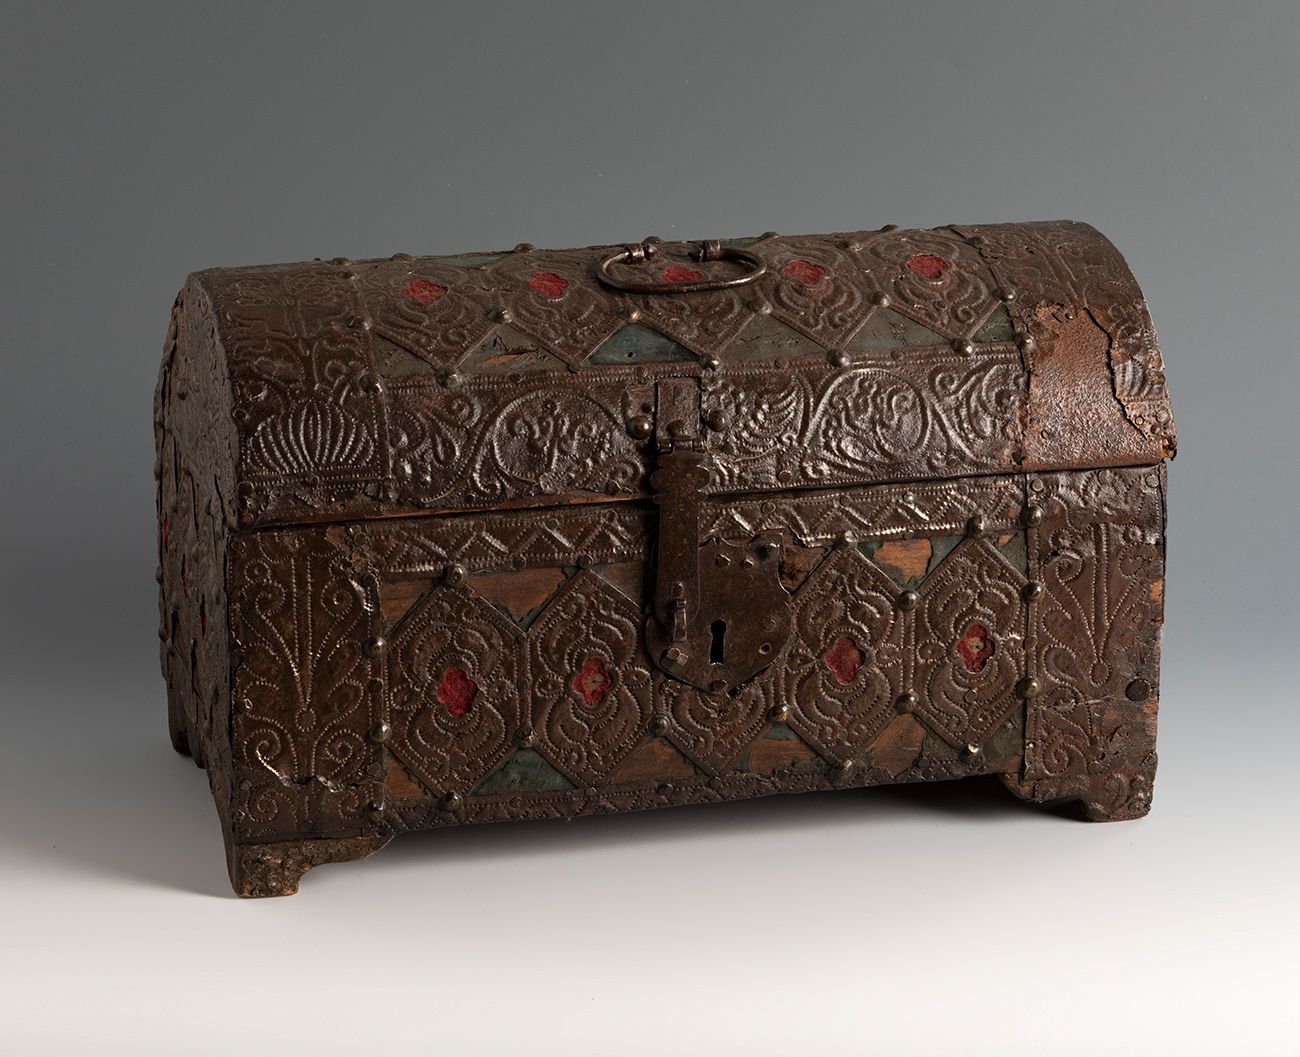 Null 柜子；16-17世纪。
木头上覆盖着青铜板和织物。
布料和青铜都不见了。
它没有钥匙或锁。
尺寸：24 x 39 x 20厘米；24.5 x 39 x&hellip;